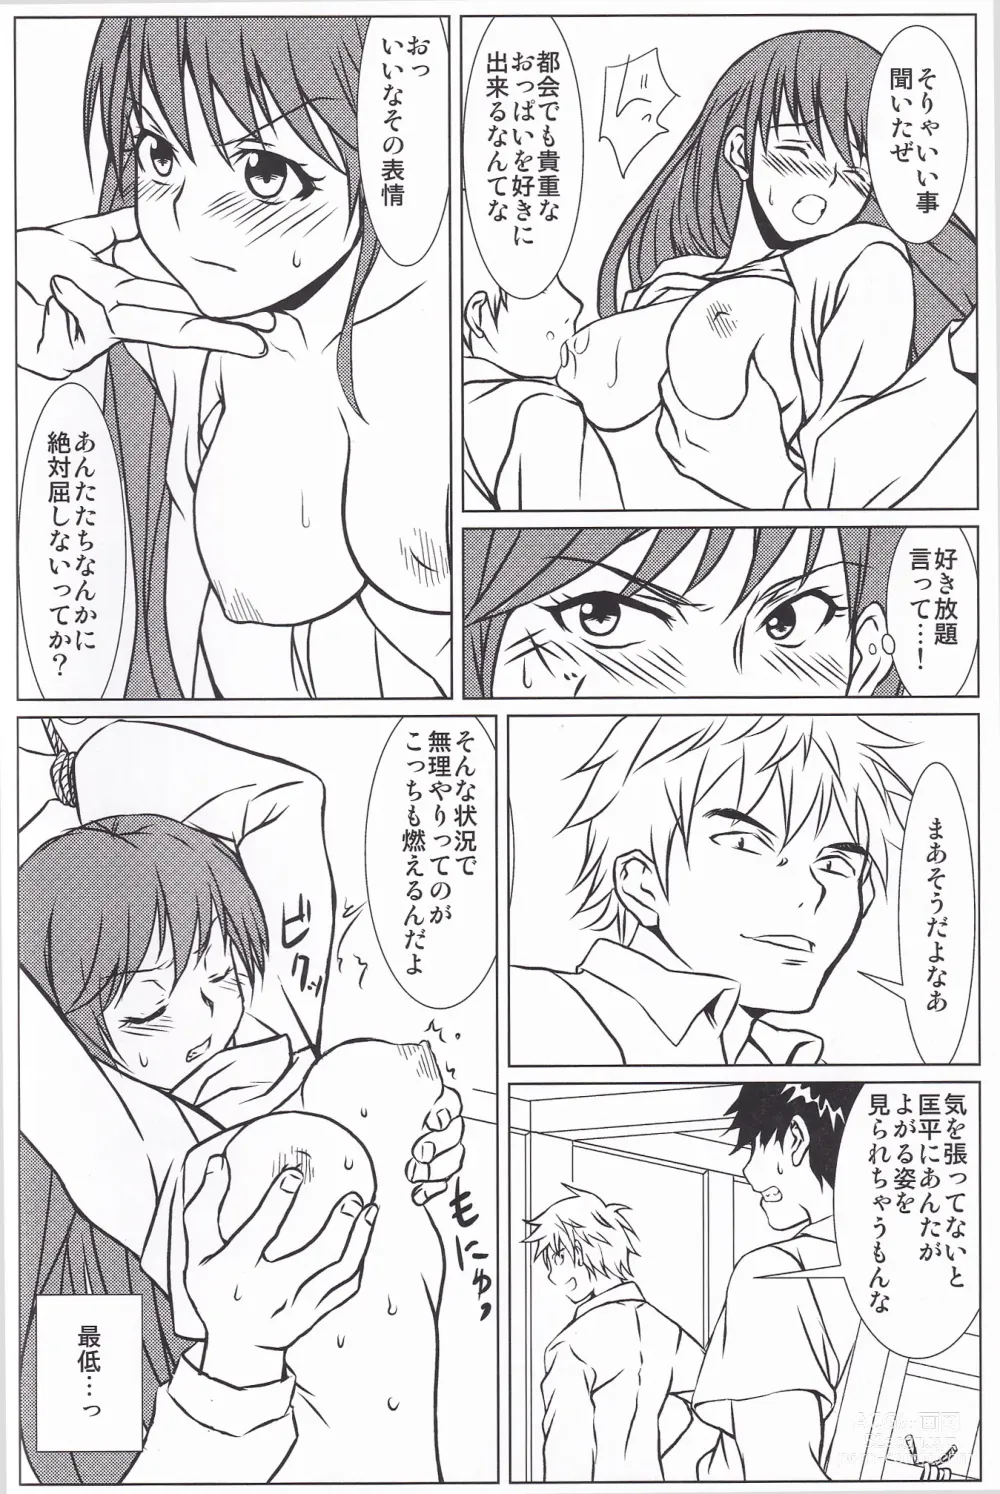 Page 9 of doujinshi Hibi no Uta